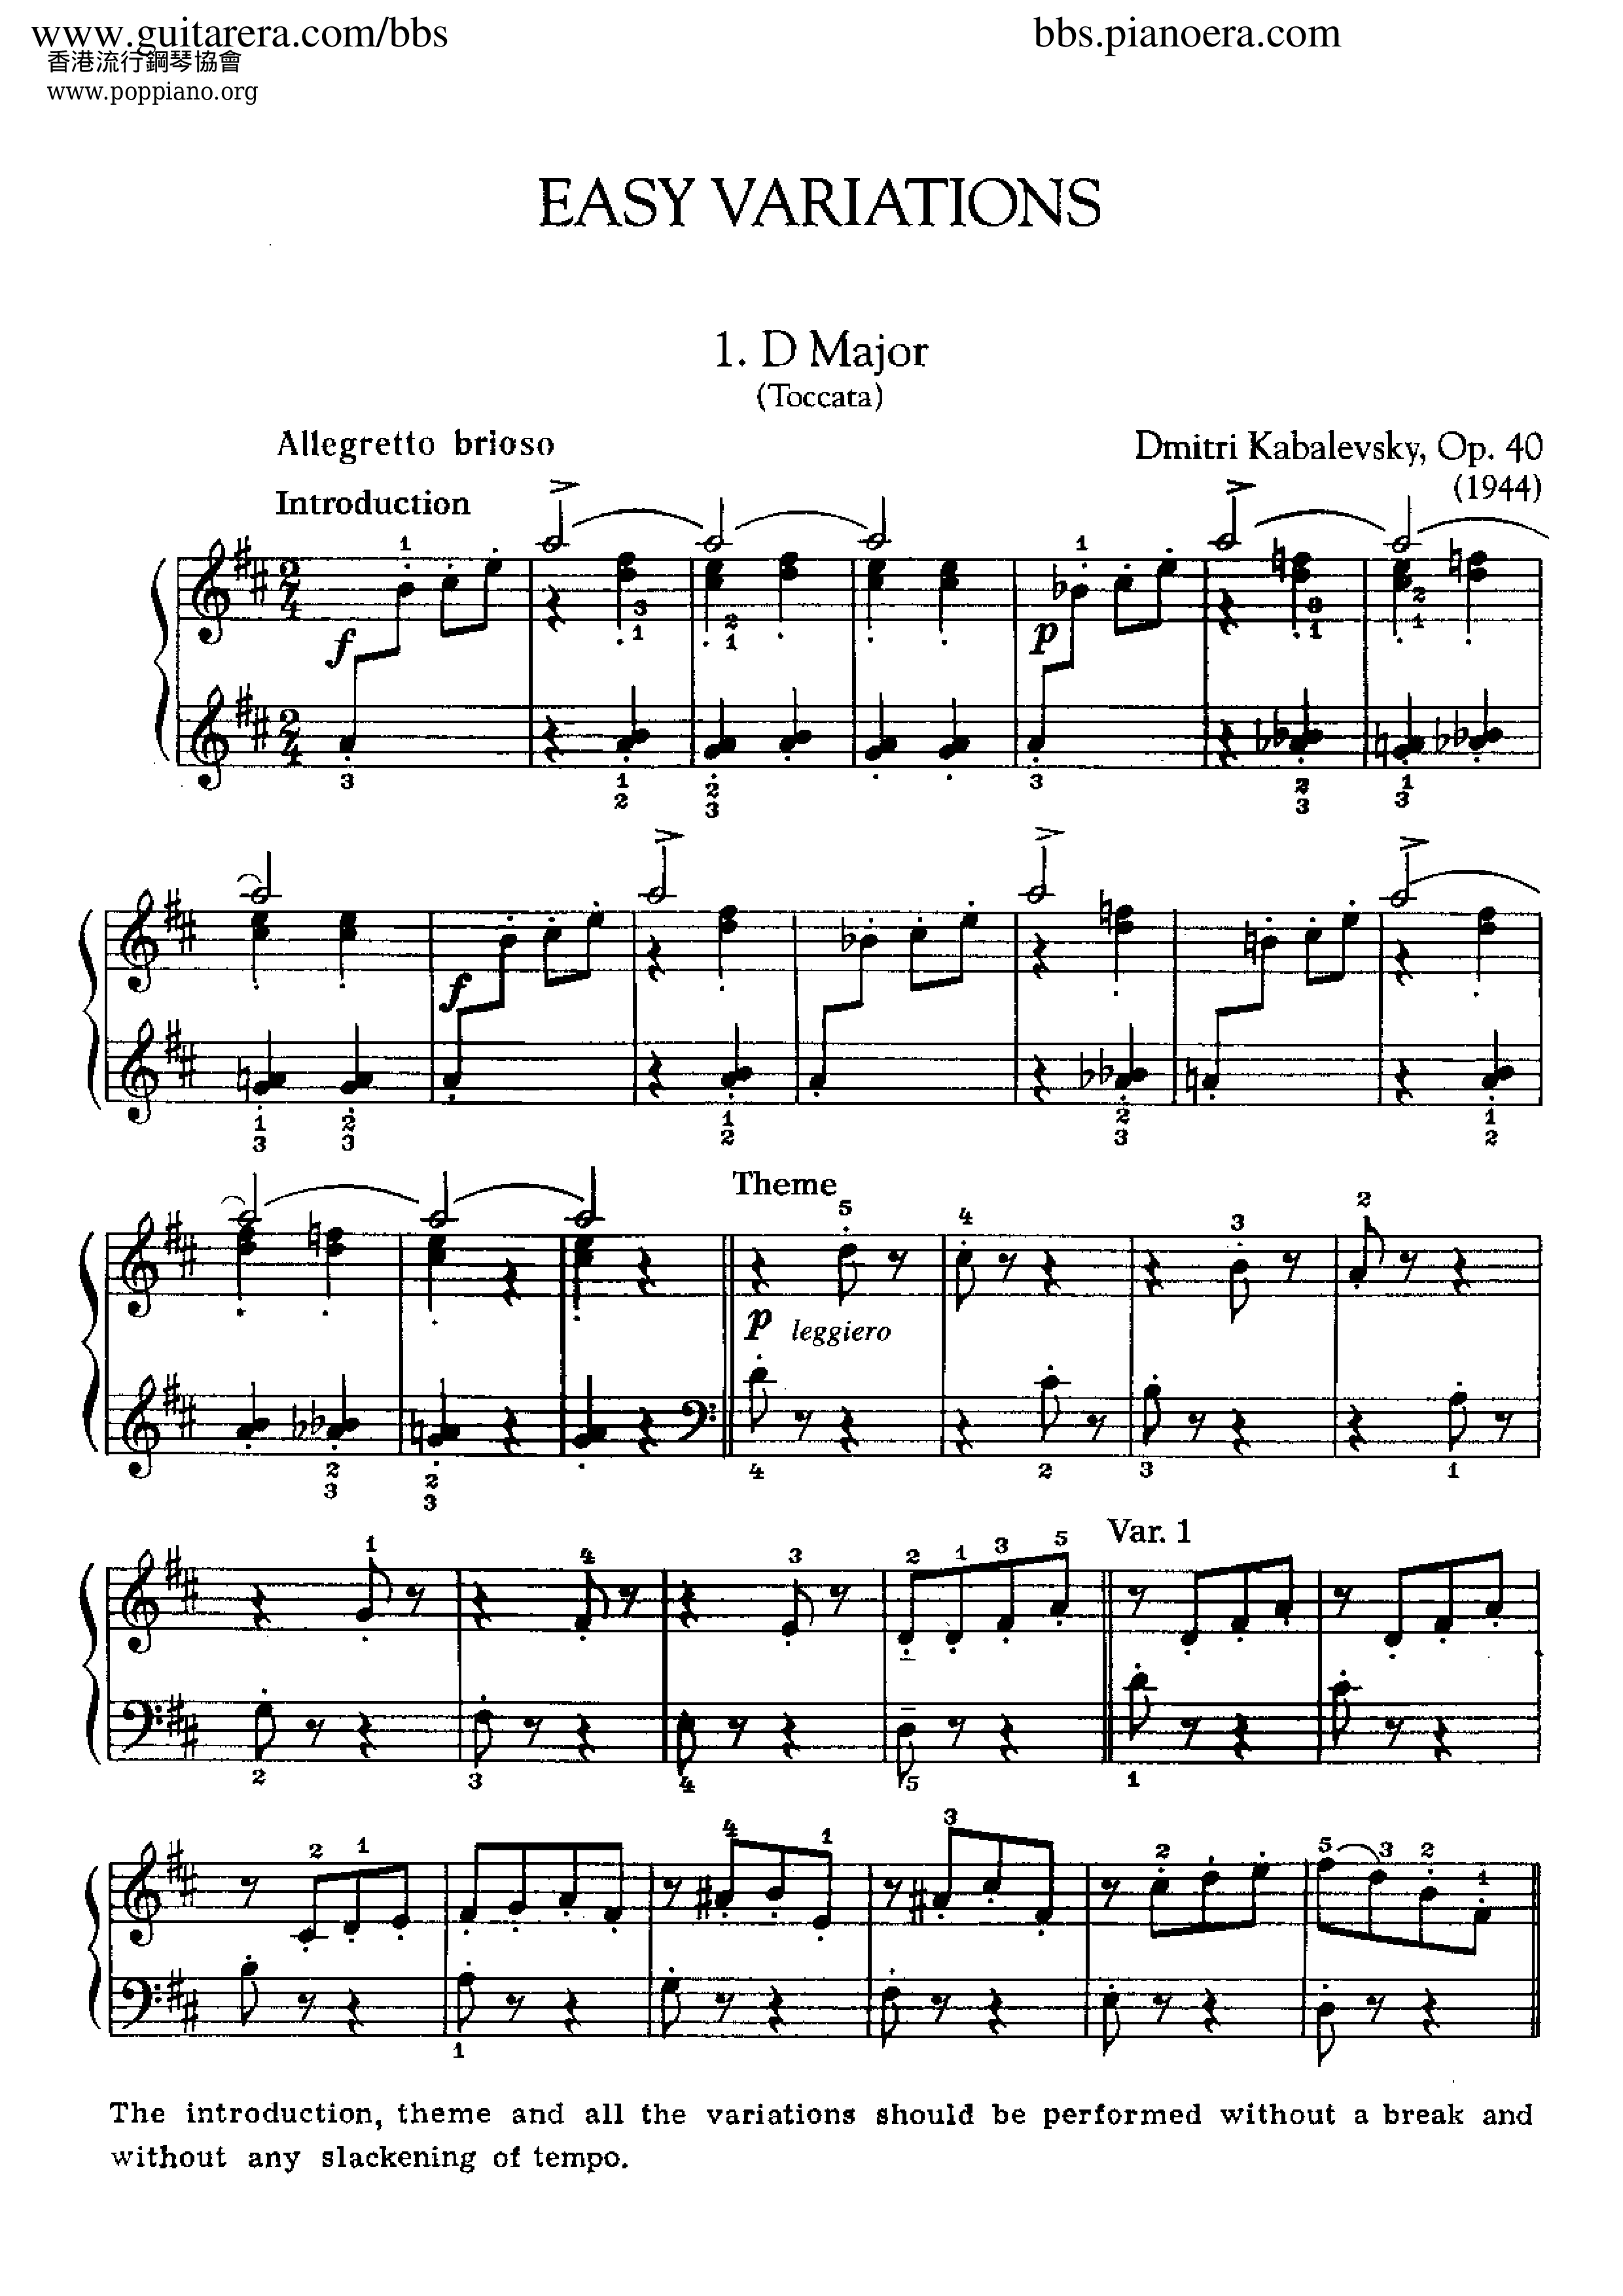 Easy Variations op. 40 in D Major Score